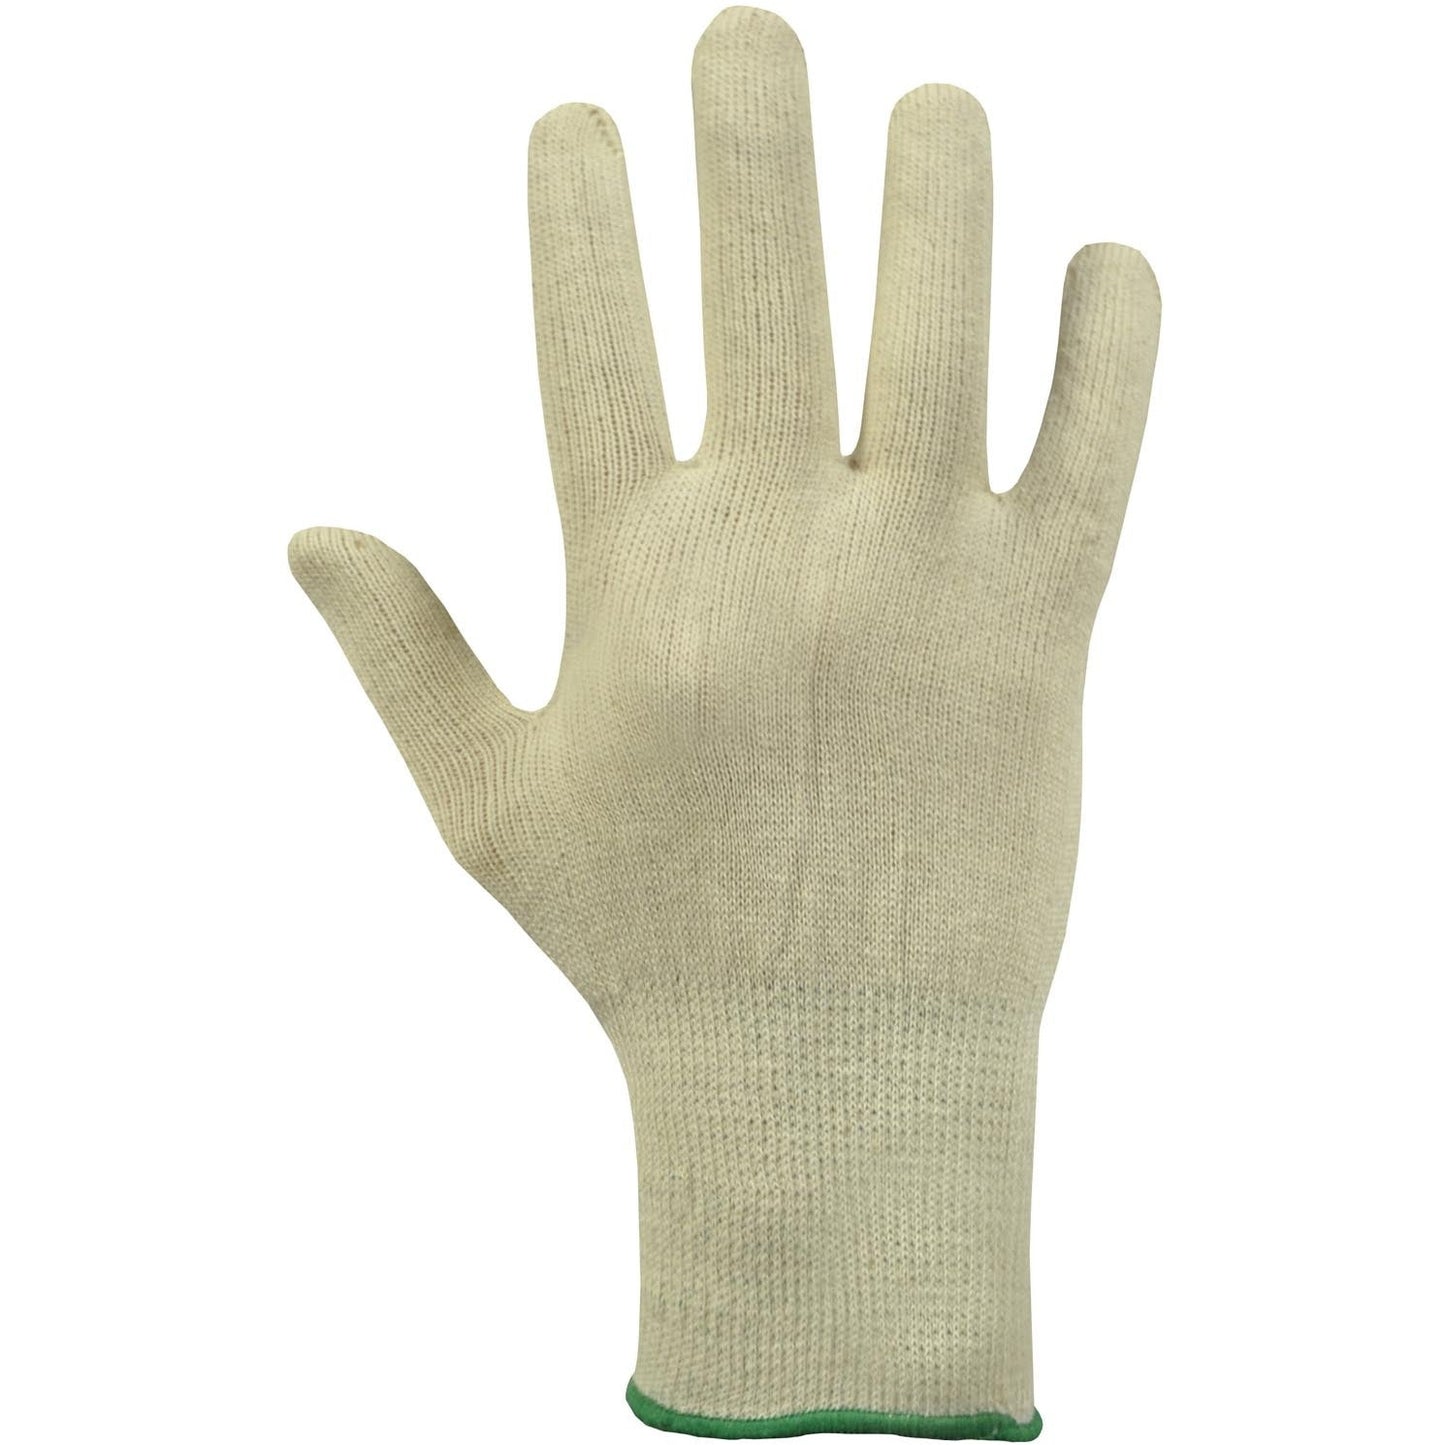 Dermatology Cotton Gloves - Reusable